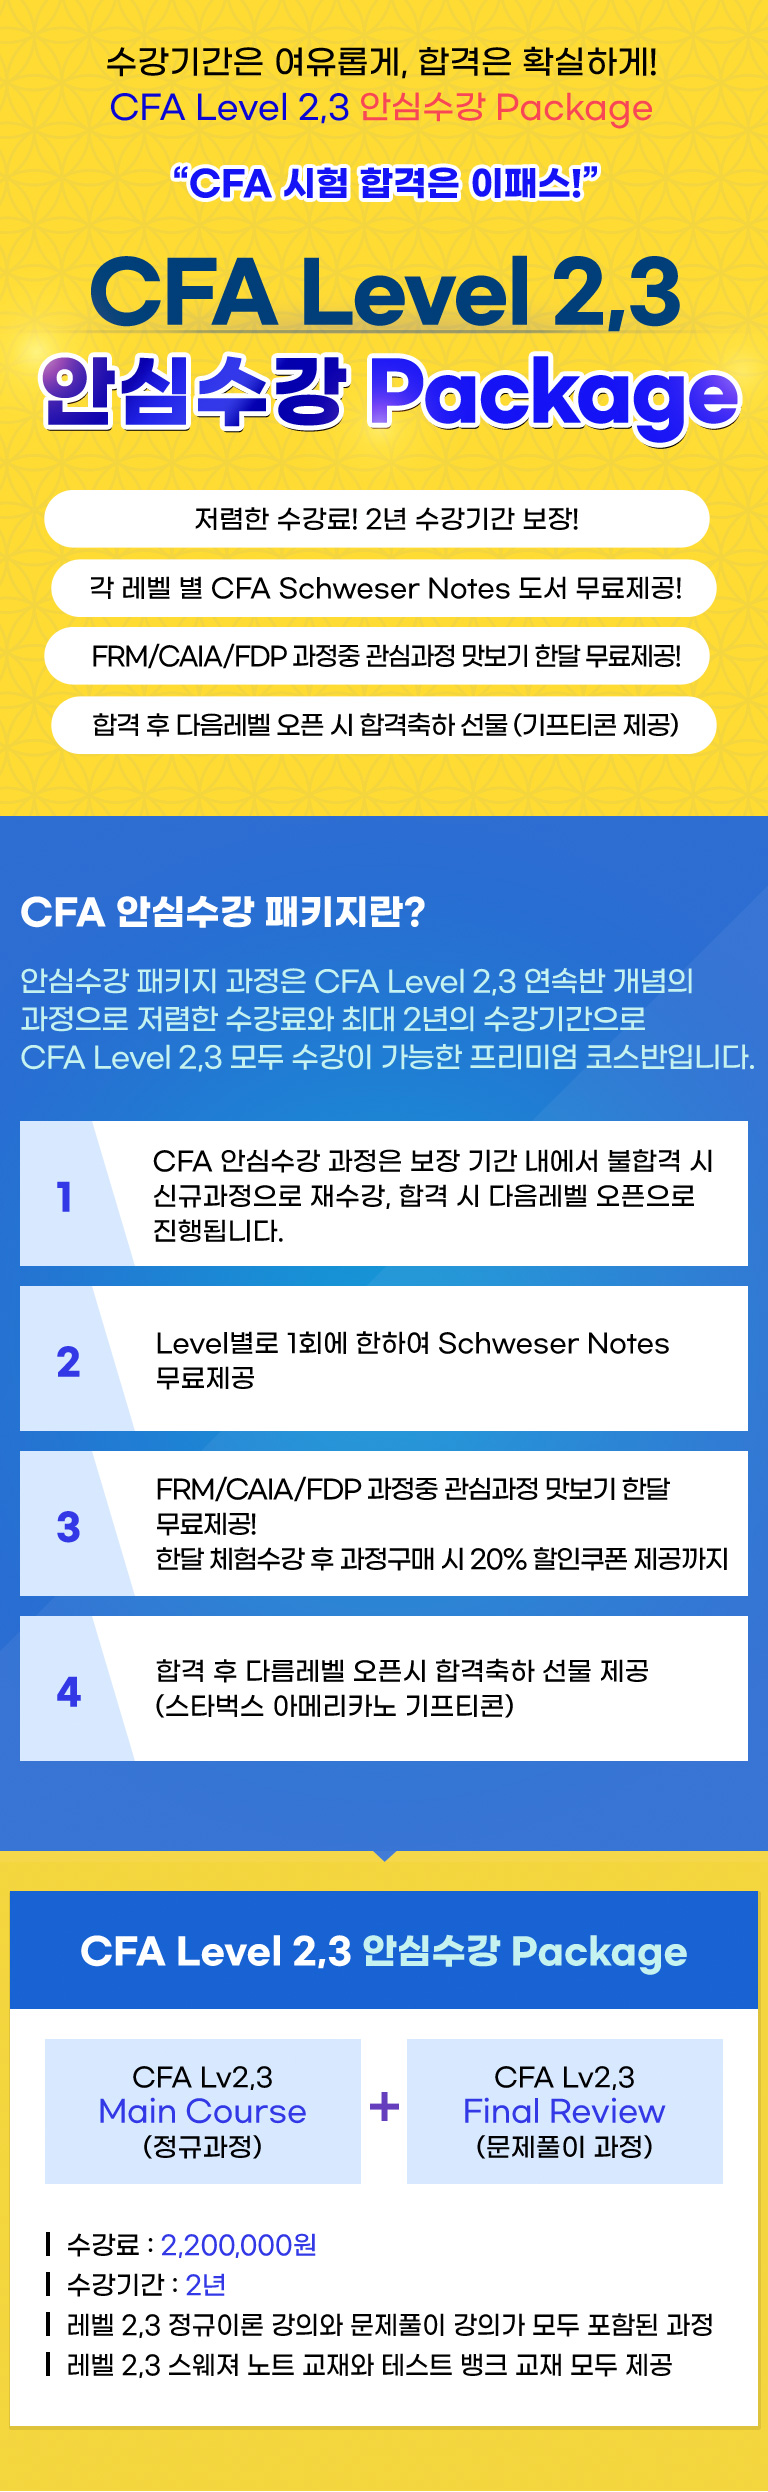 CFA level 2,3 안심수강 Package